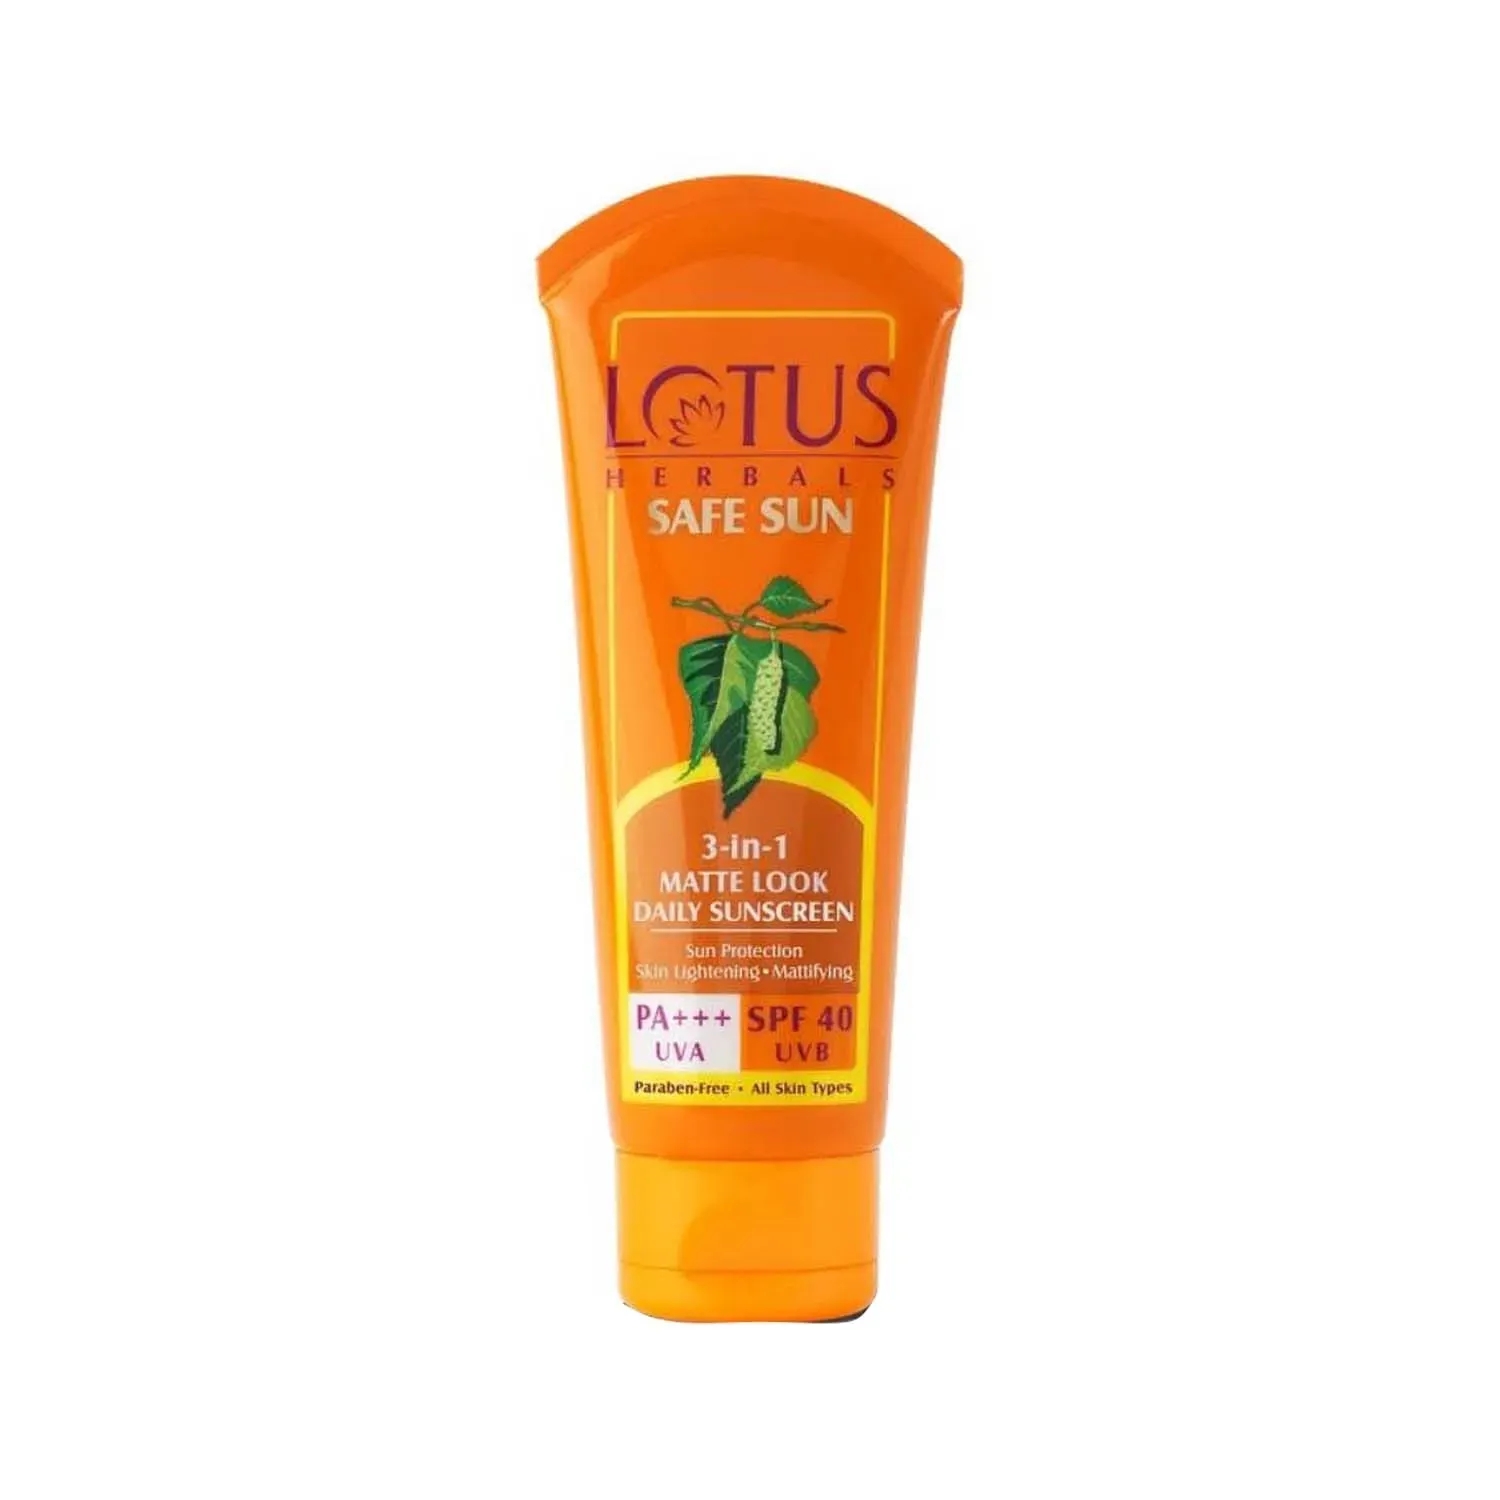 Lotus | Lotus Herbals Safe Sun 3 In 1 Matte Look Daily Sunblock SPF 40 Sunscreen - (50g)